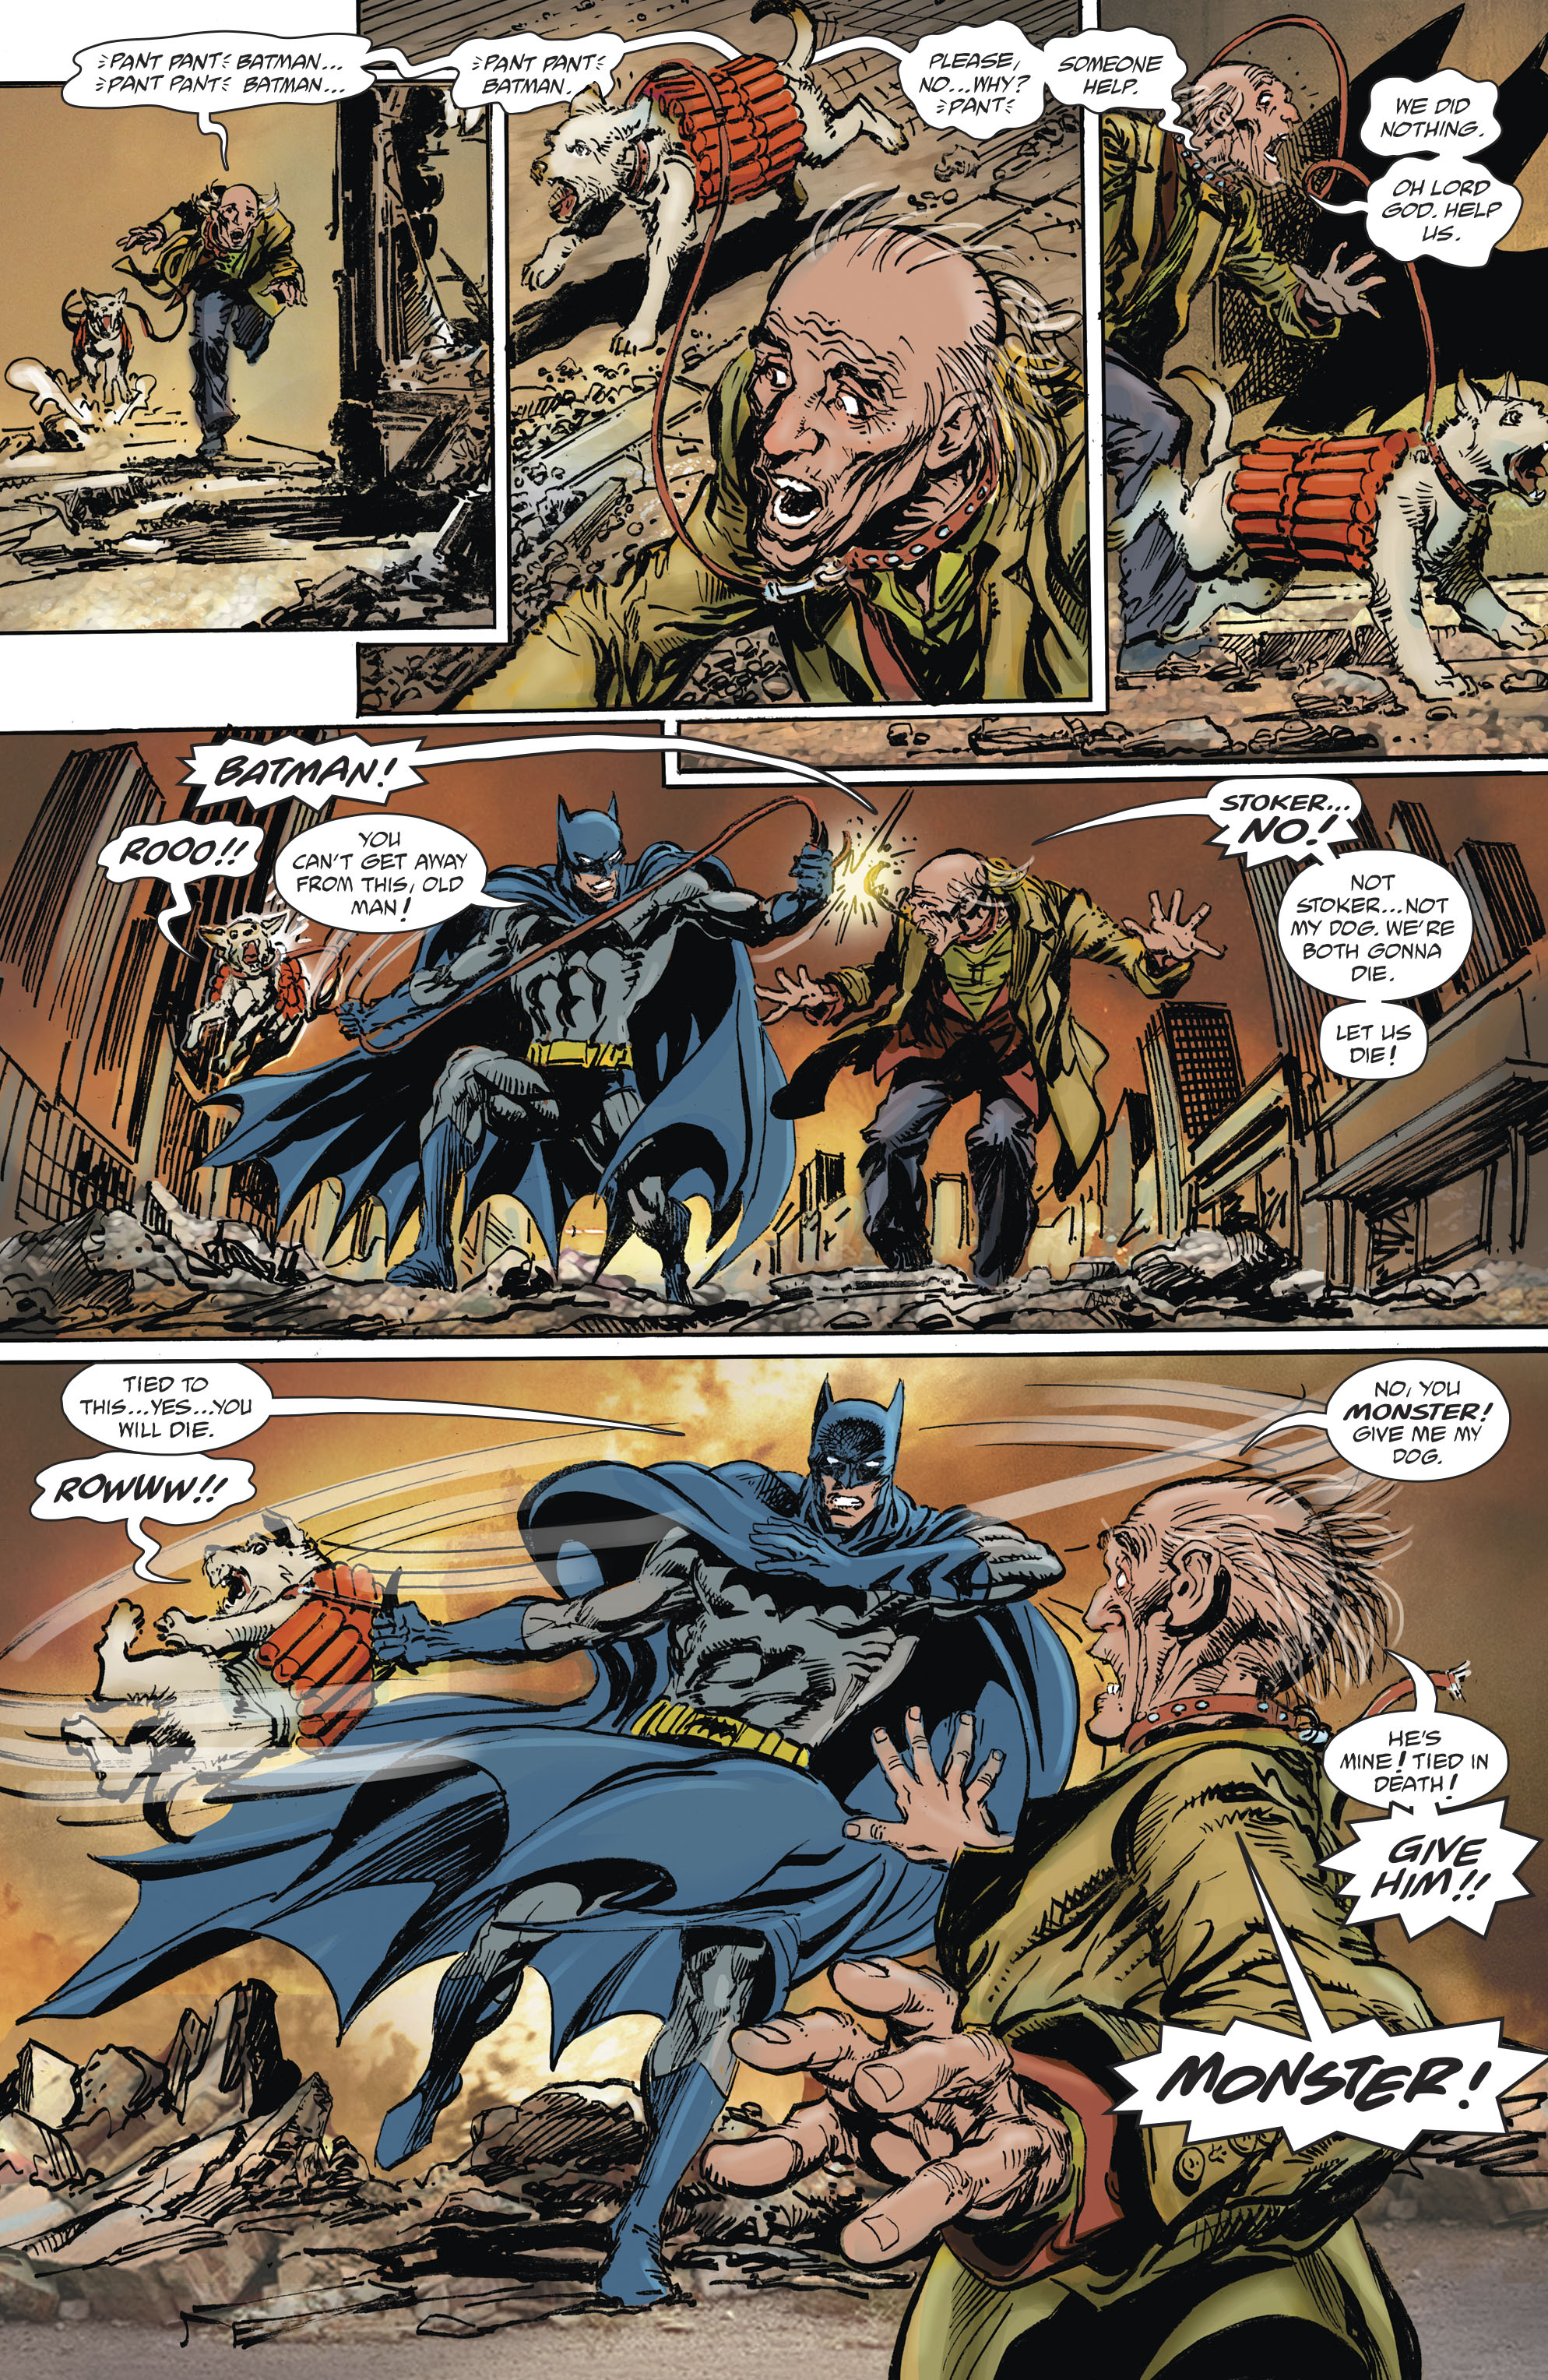 Batman Vs Ra S Al Ghul Issue 1 | Read Batman Vs Ra S Al Ghul Issue 1 comic  online in high quality. Read Full Comic online for free - Read comics